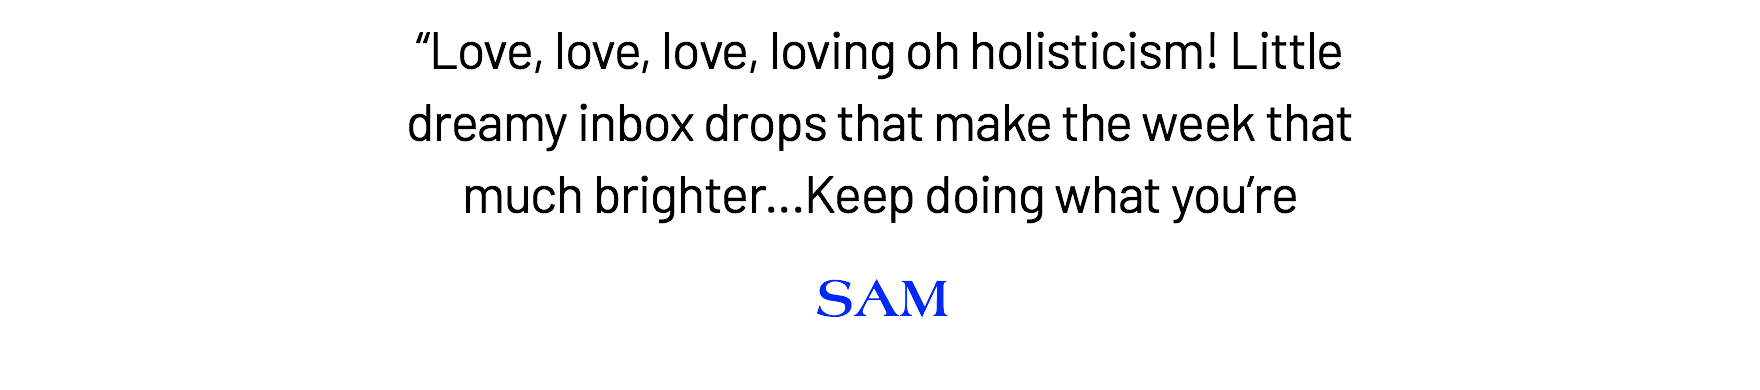 Community-Love-Quotes_SAM.jpg